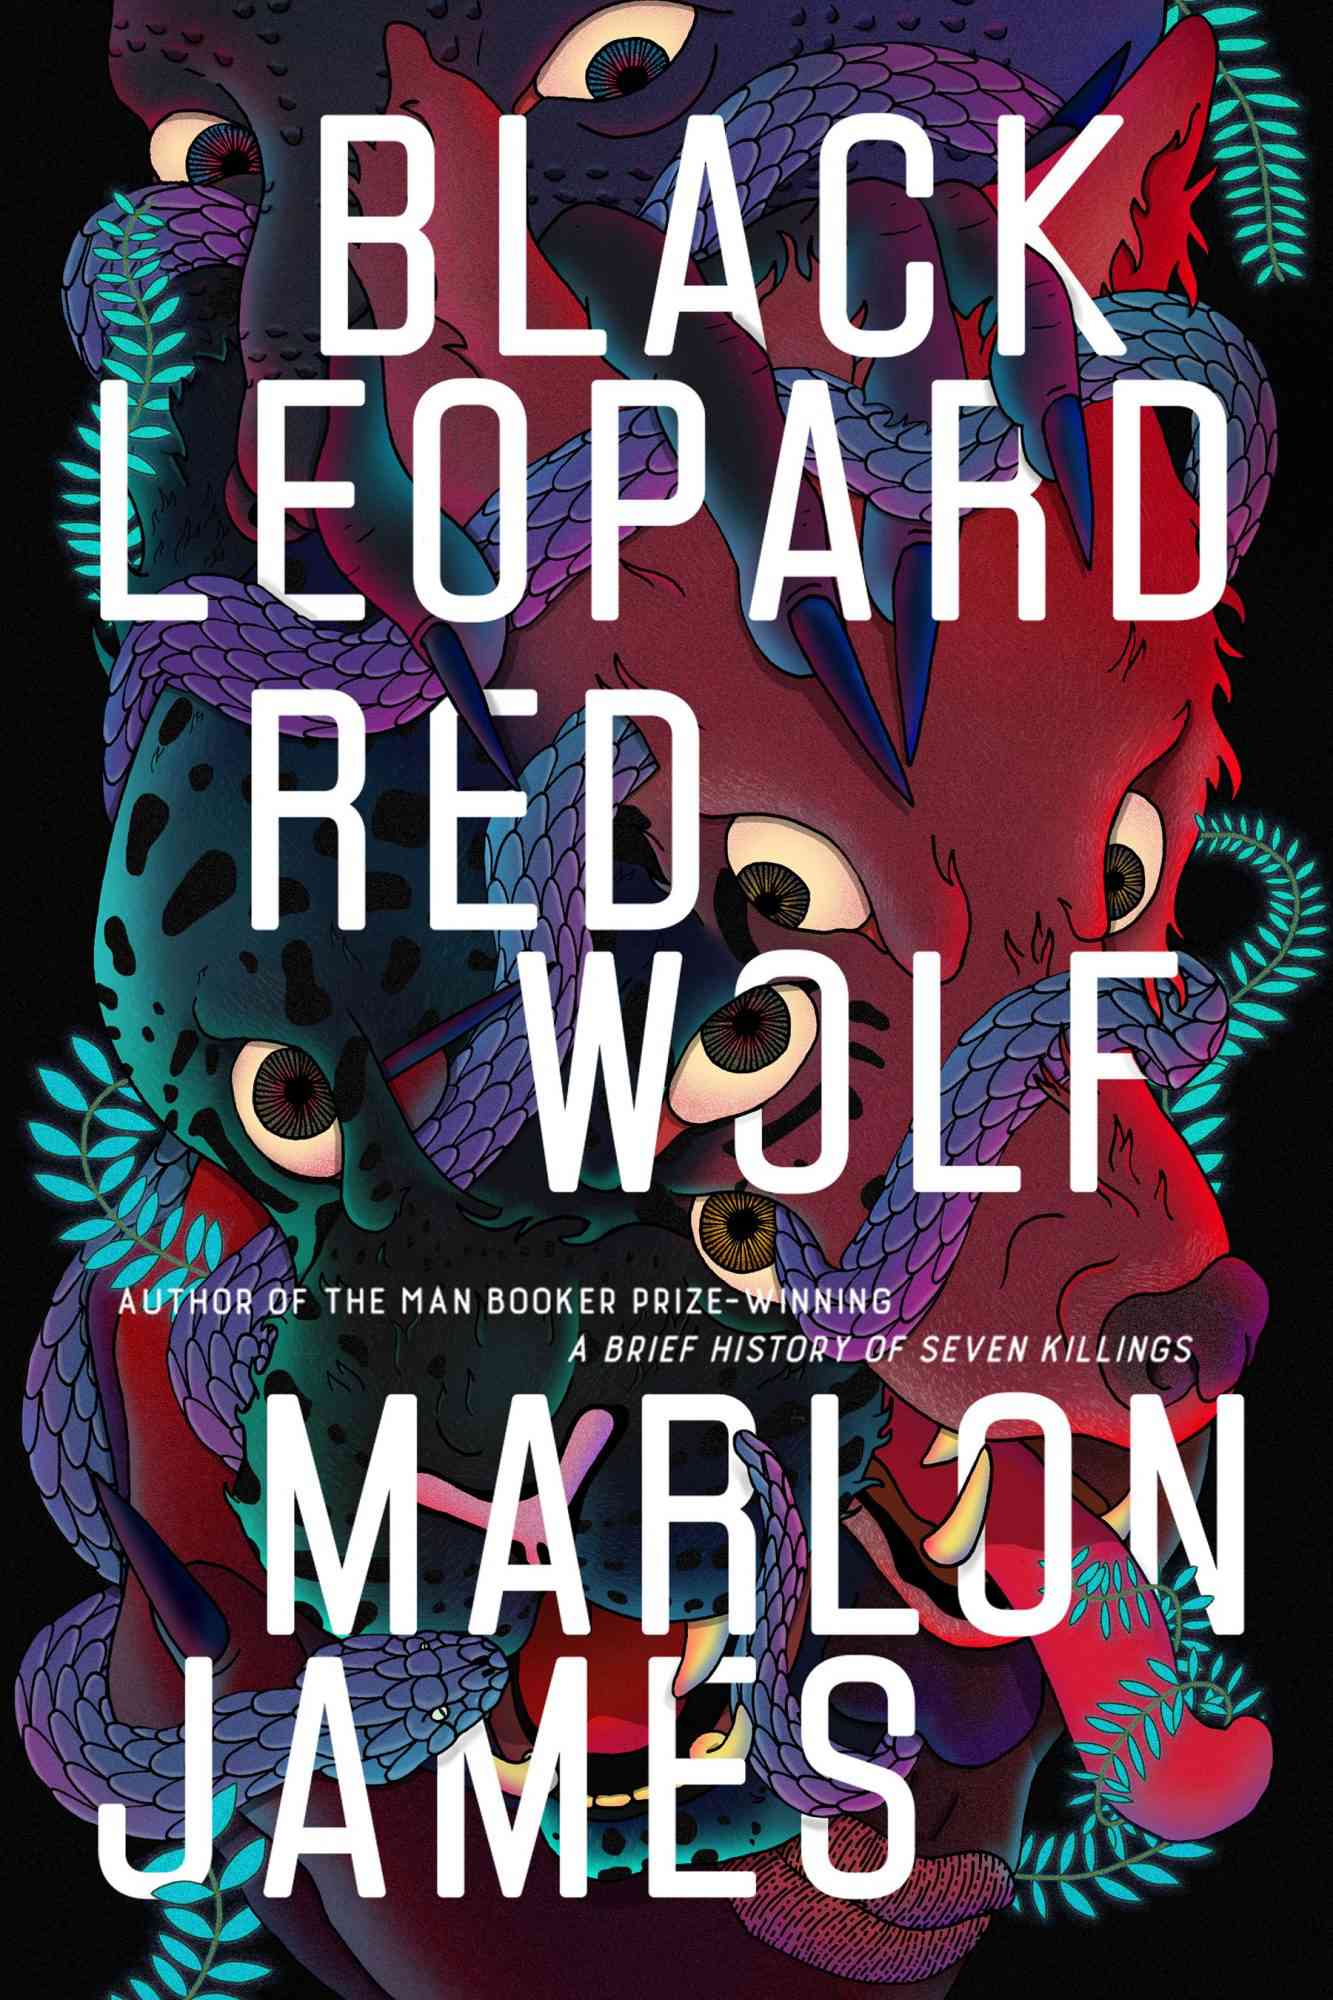 Brawl barbermaskine kylling Book review: Marlon James' fantasy Black Leopard, Red Wolf | EW.com